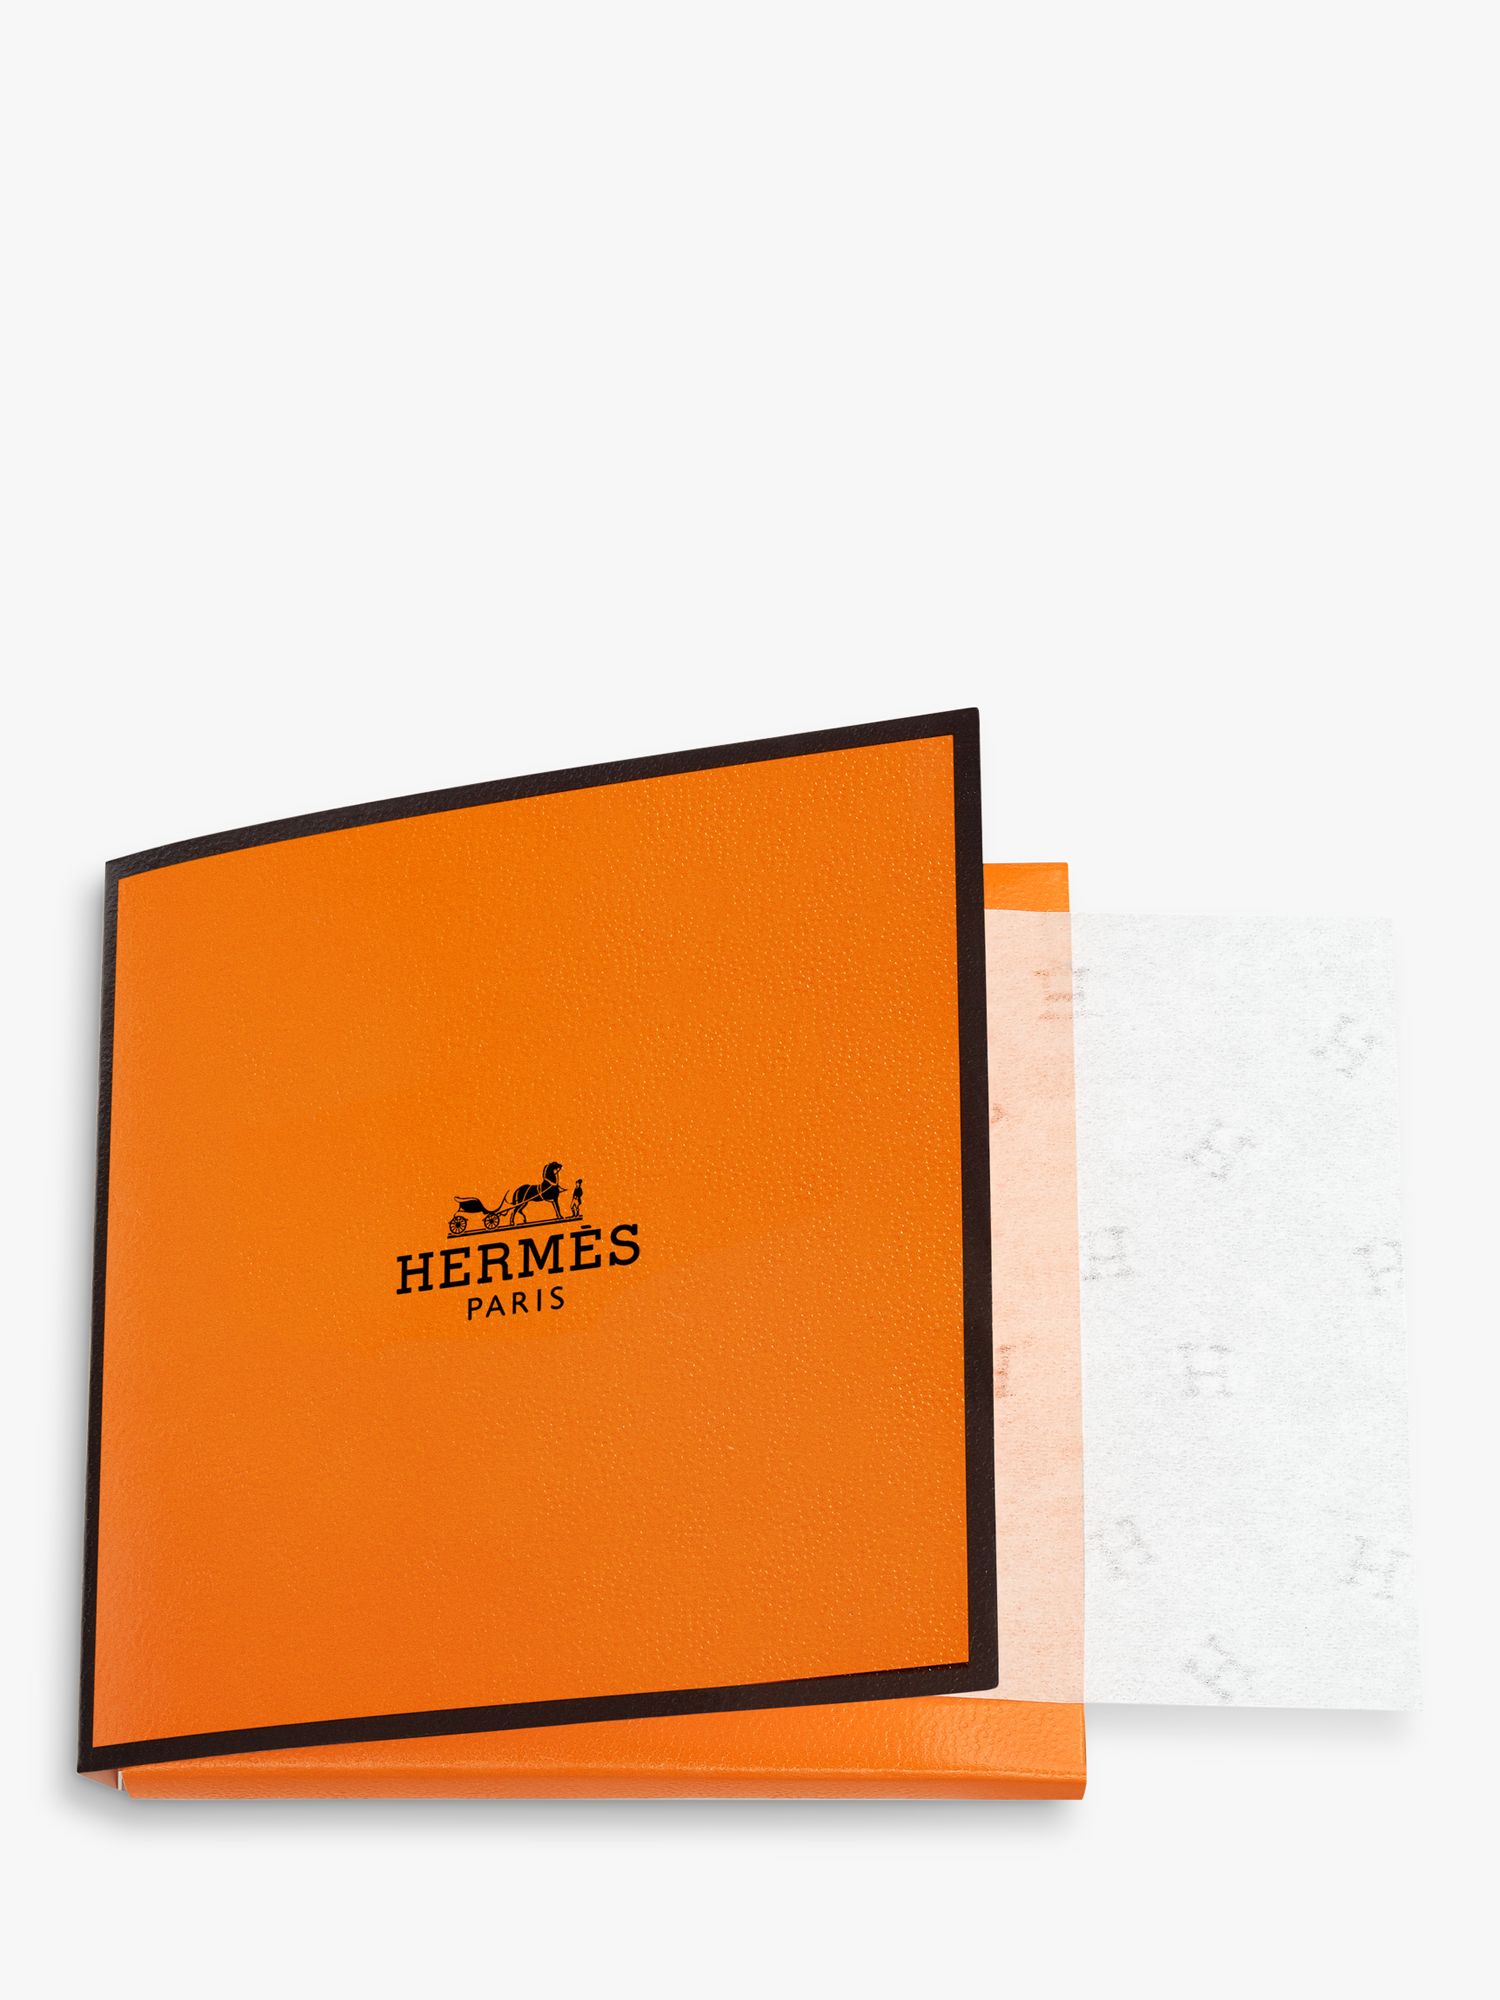 Hermès Plein Air Blotting Papers, x 100 1